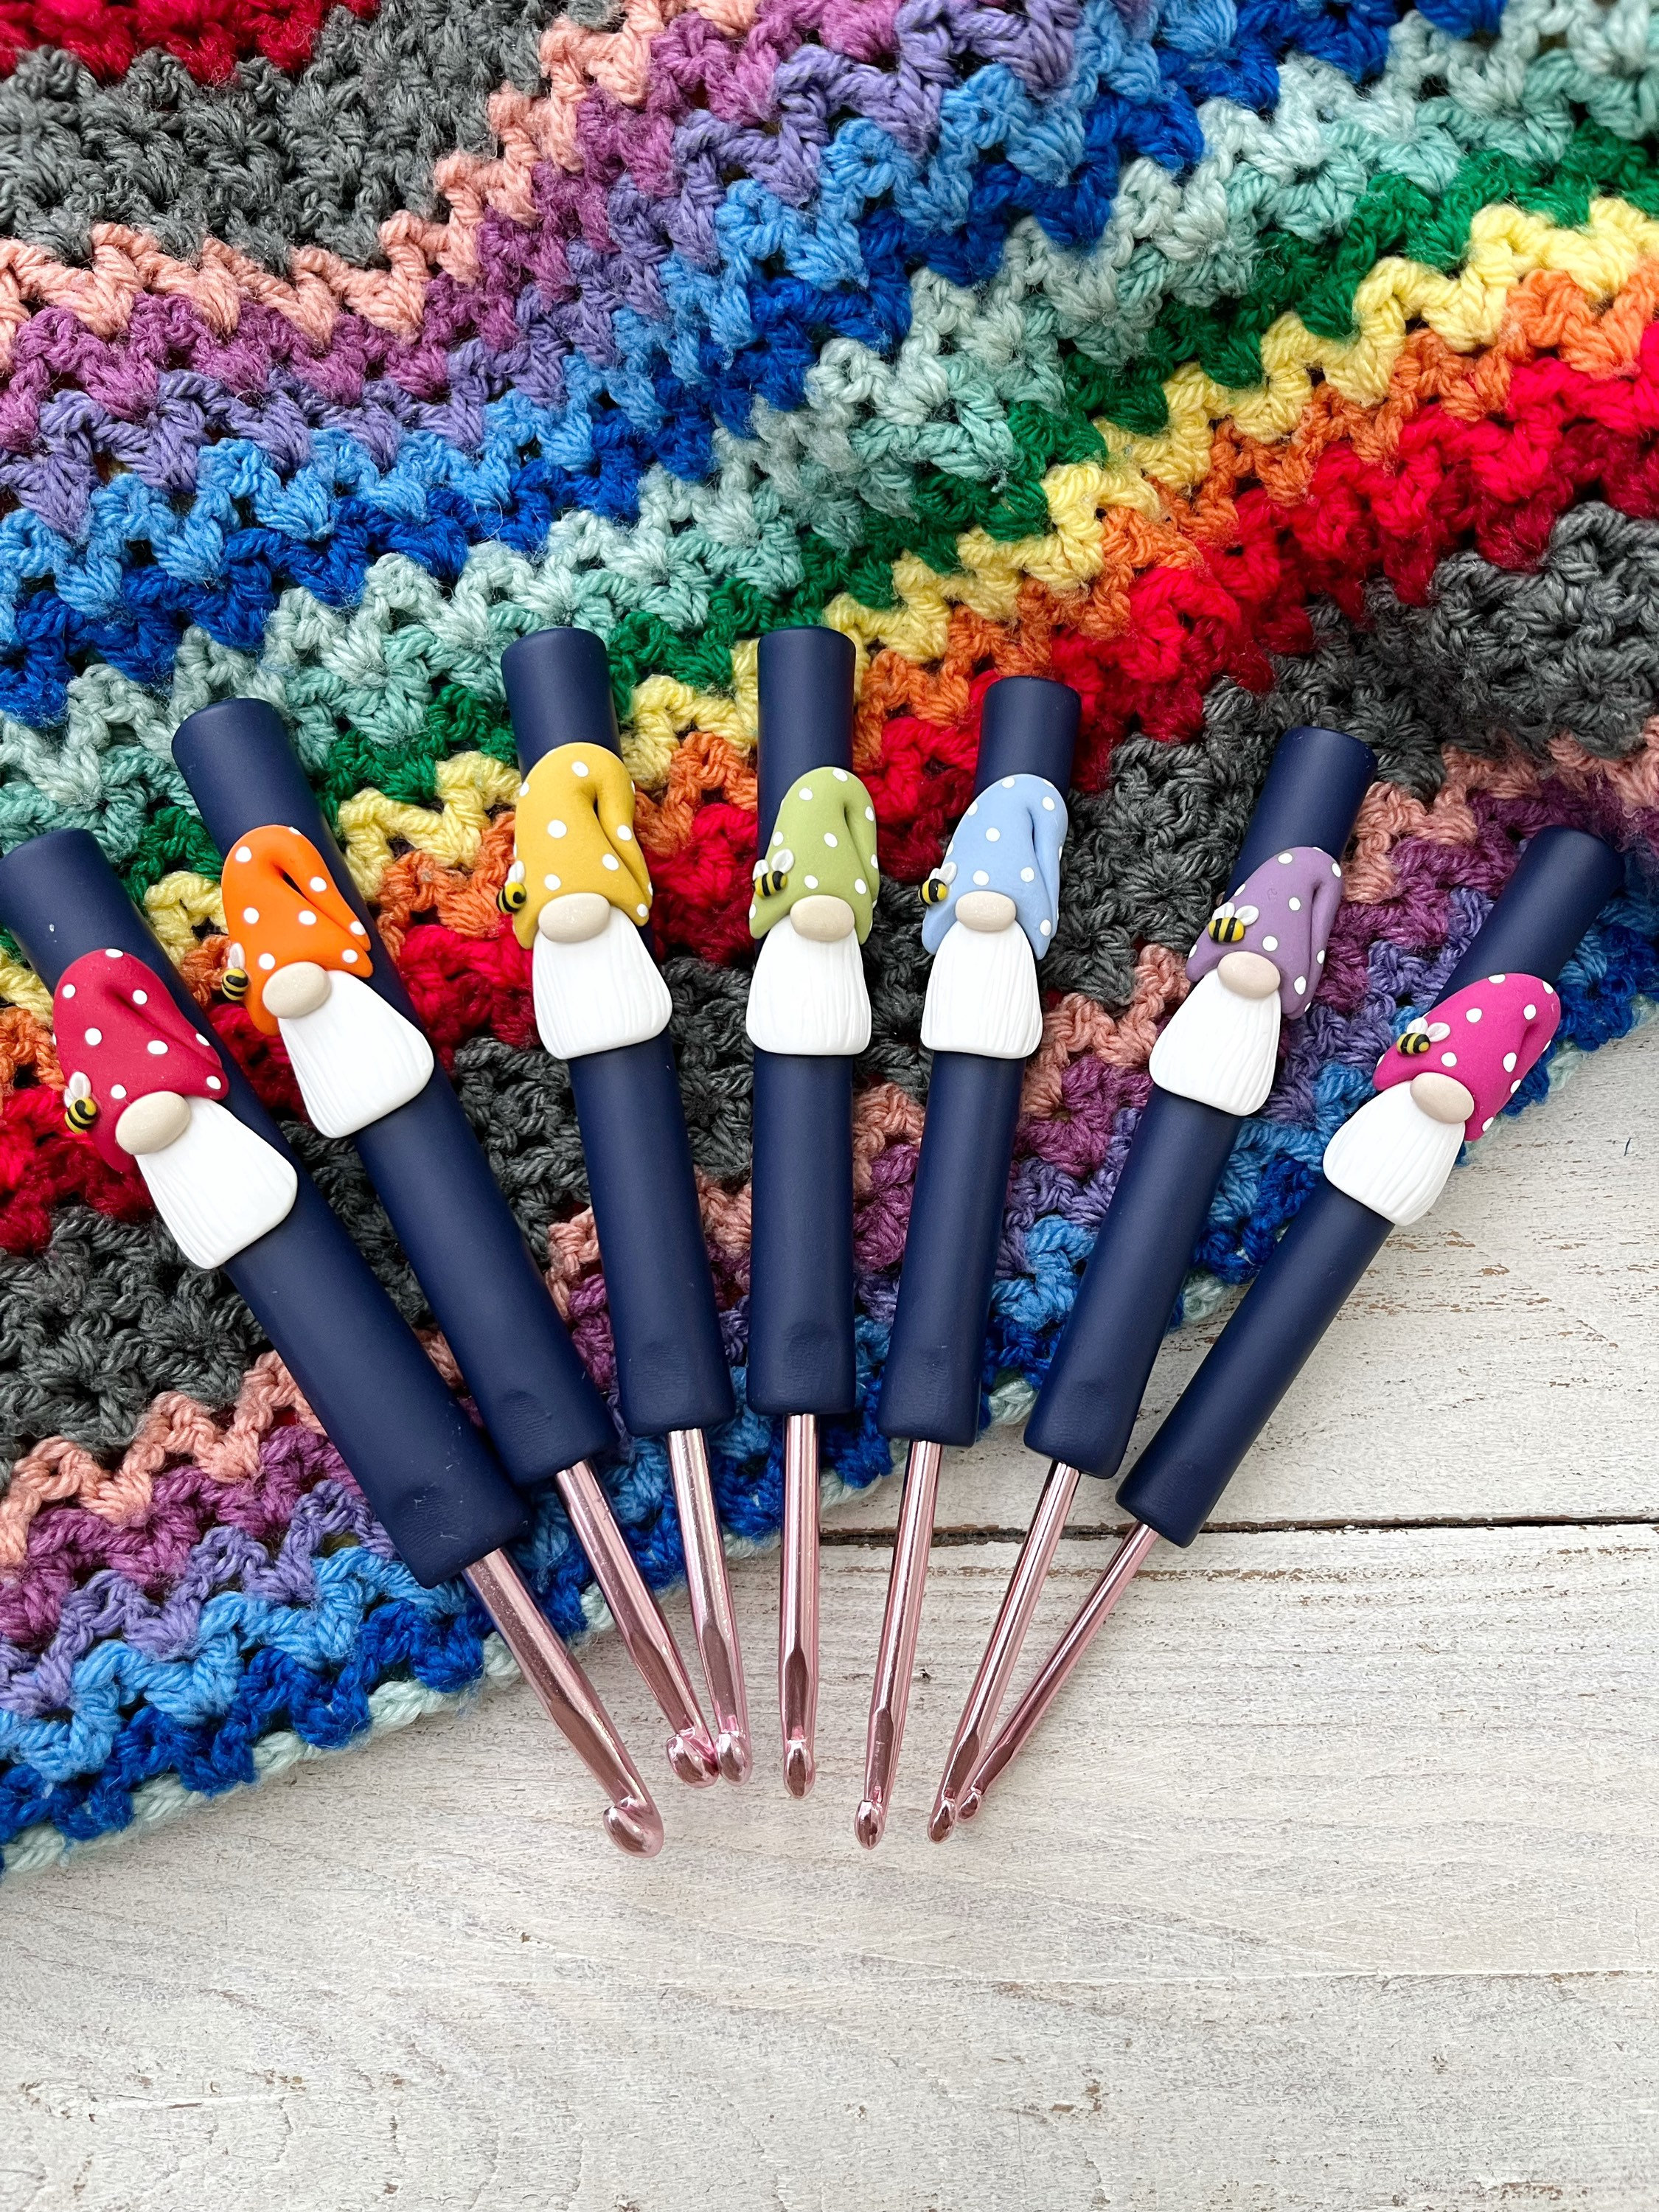 Crochet Hook Sets For Beginners, Blue Floral Crochet Hooks Soft